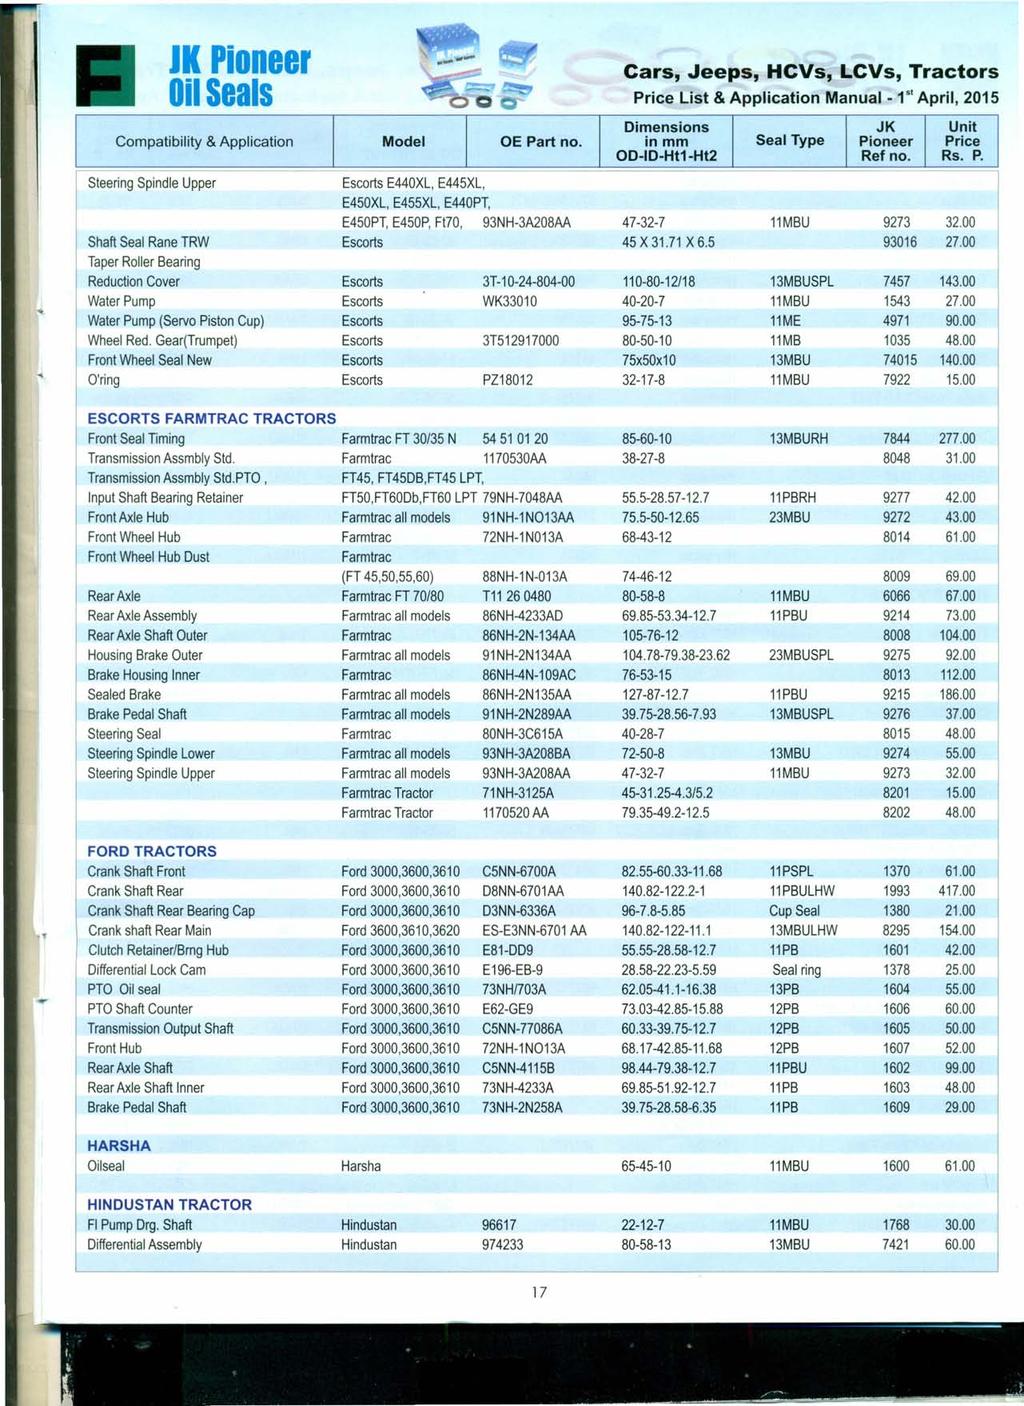 II Pioneer Price List & Application Manual - 1 51 April, 2015. ~ Steering Spindle Upper Escorts E440XL, E445XL, E450XL, E455XL, E440PT, E450PT, E450P, mo, 93NH-3A208AA 47 32 7 11MBU 9273 32.